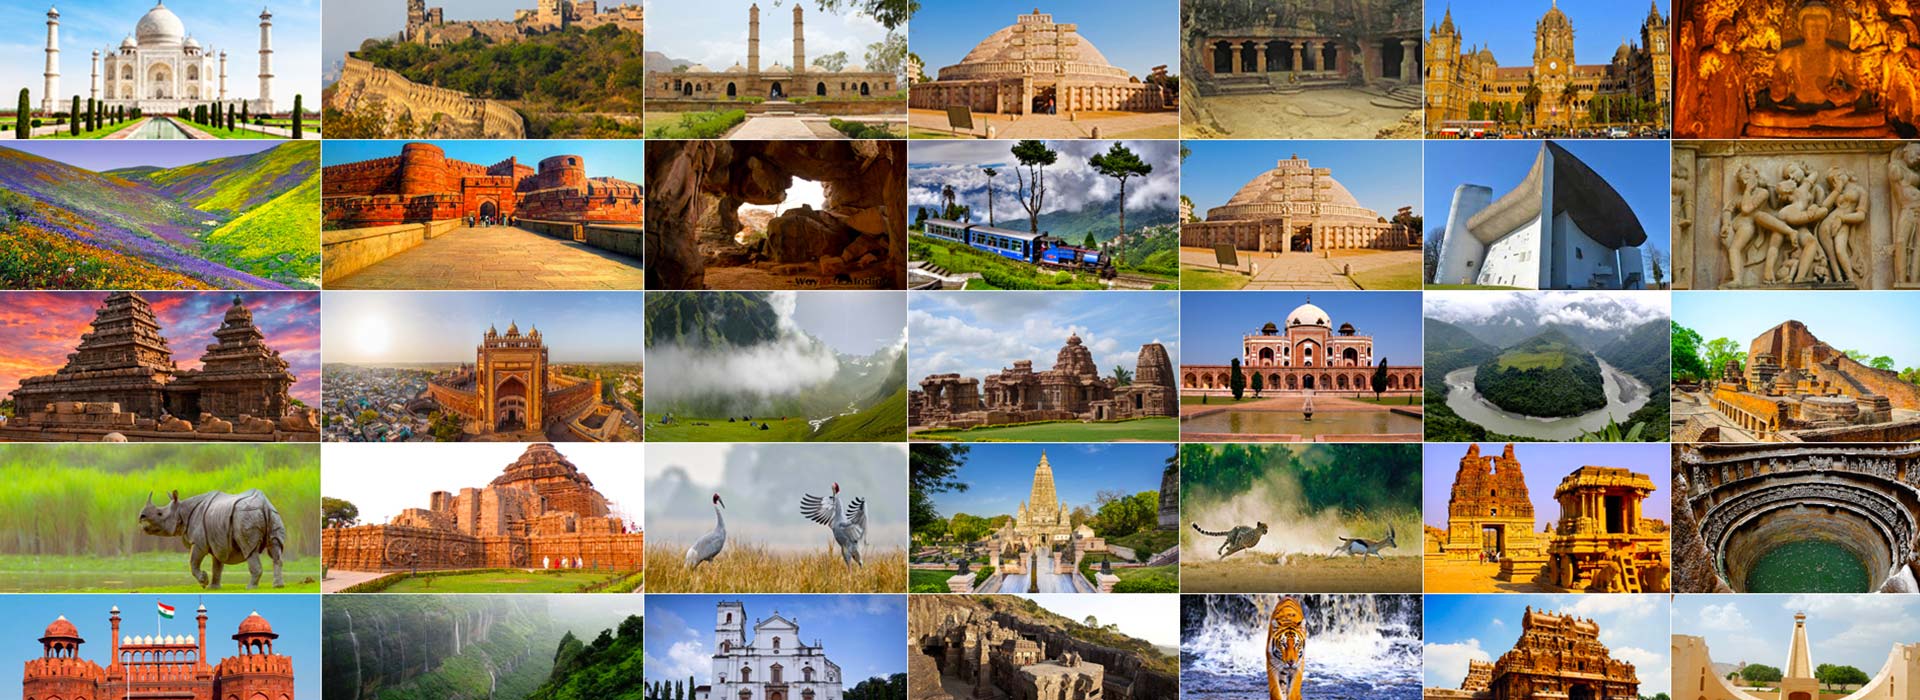 UNESCO WORLD HERITAGE INDIA TOUR